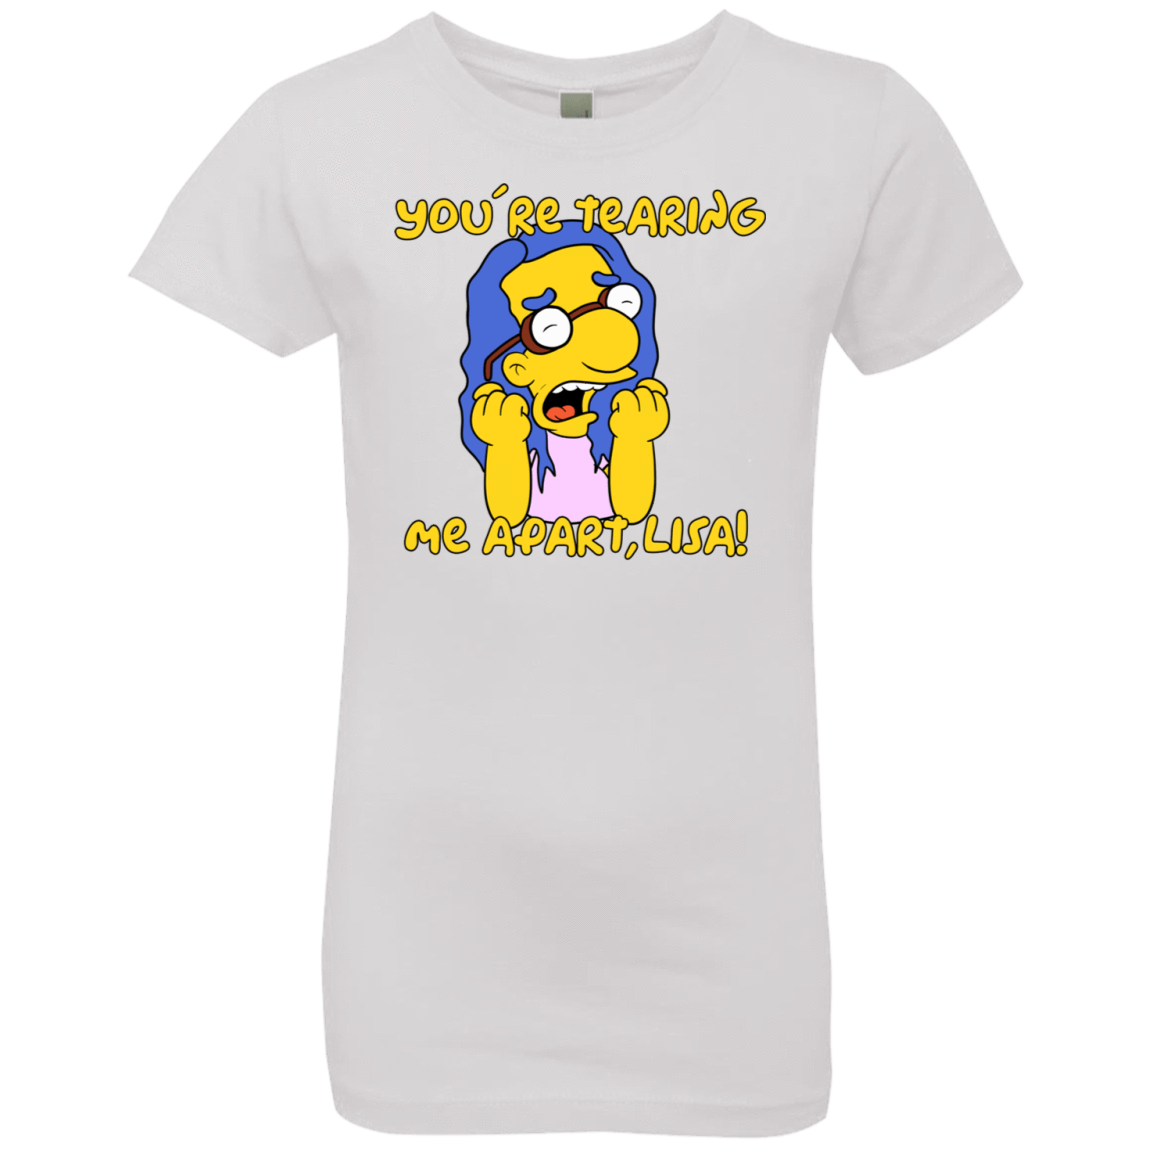 T-Shirts White / YXS Milhouse Wiseau Girls Premium T-Shirt